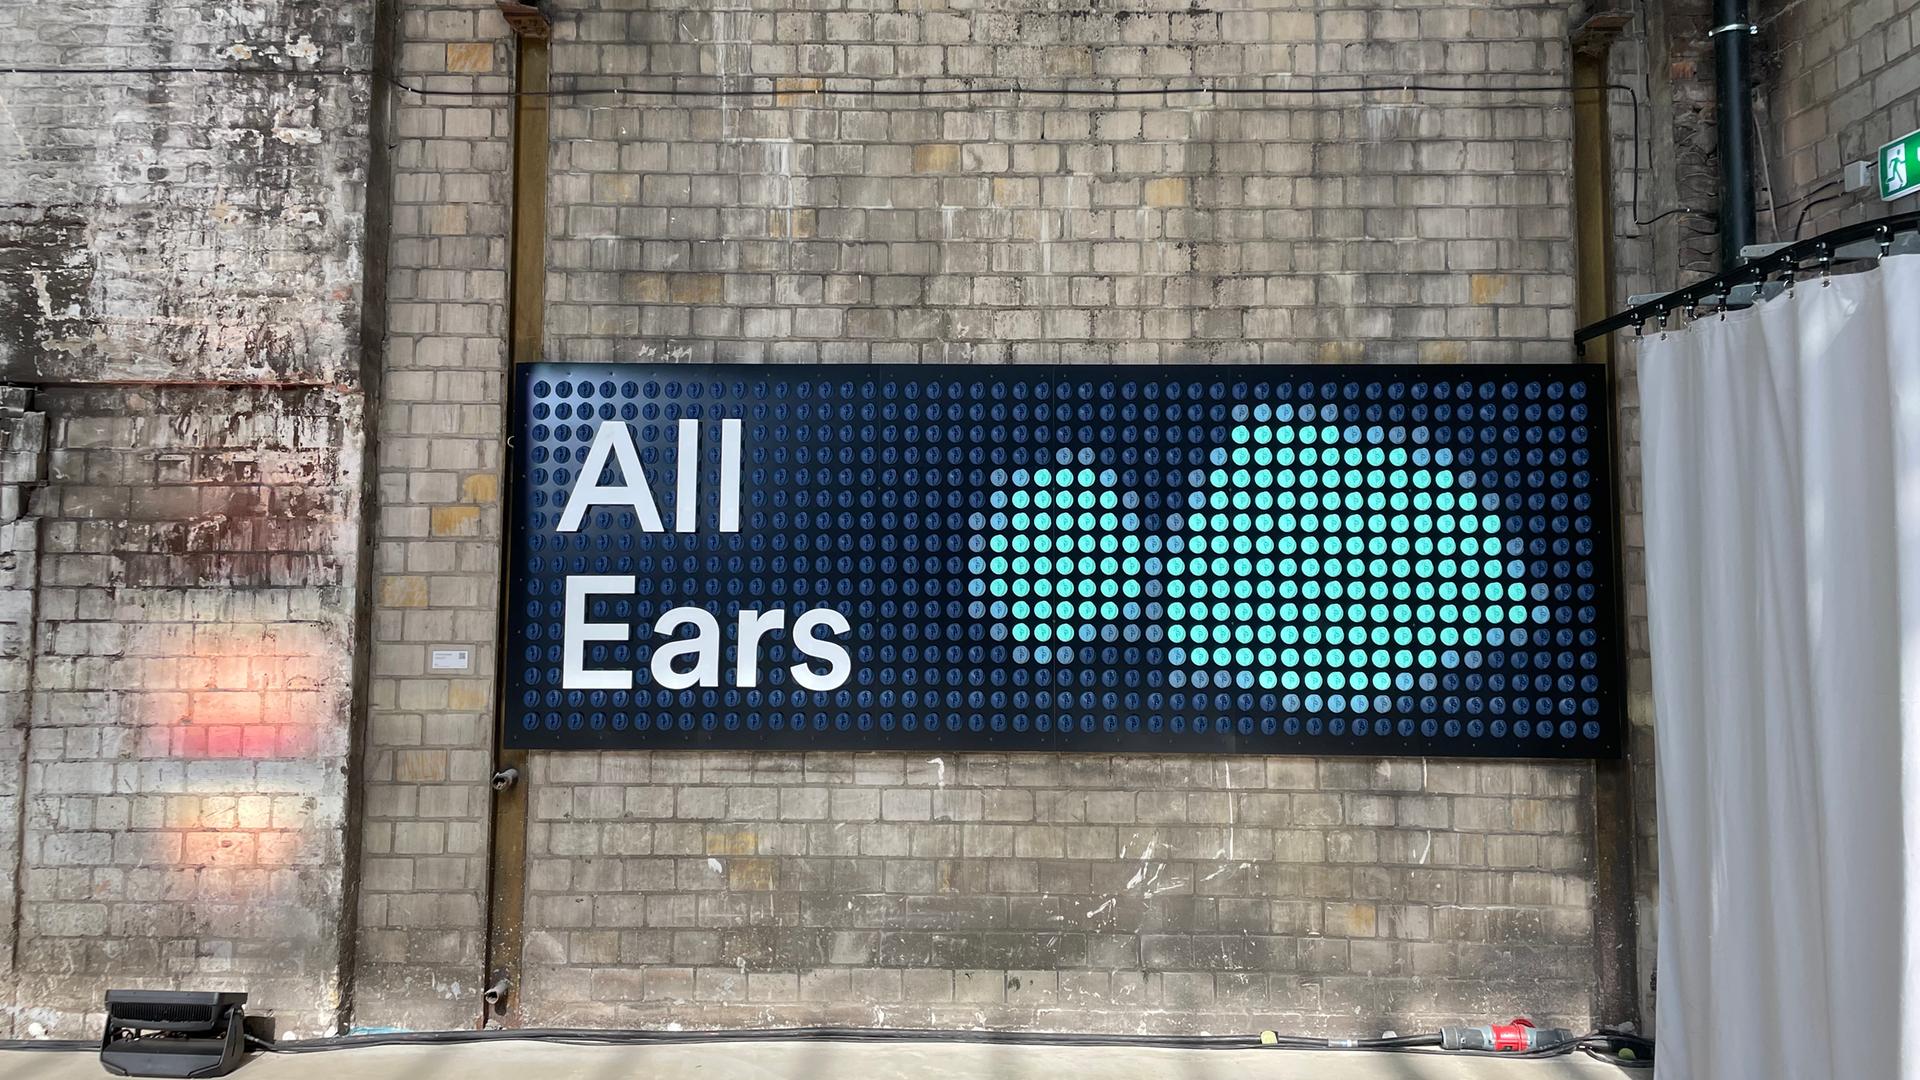 Veranstaltungsinstallation mit dem Schriftzug "all ears".